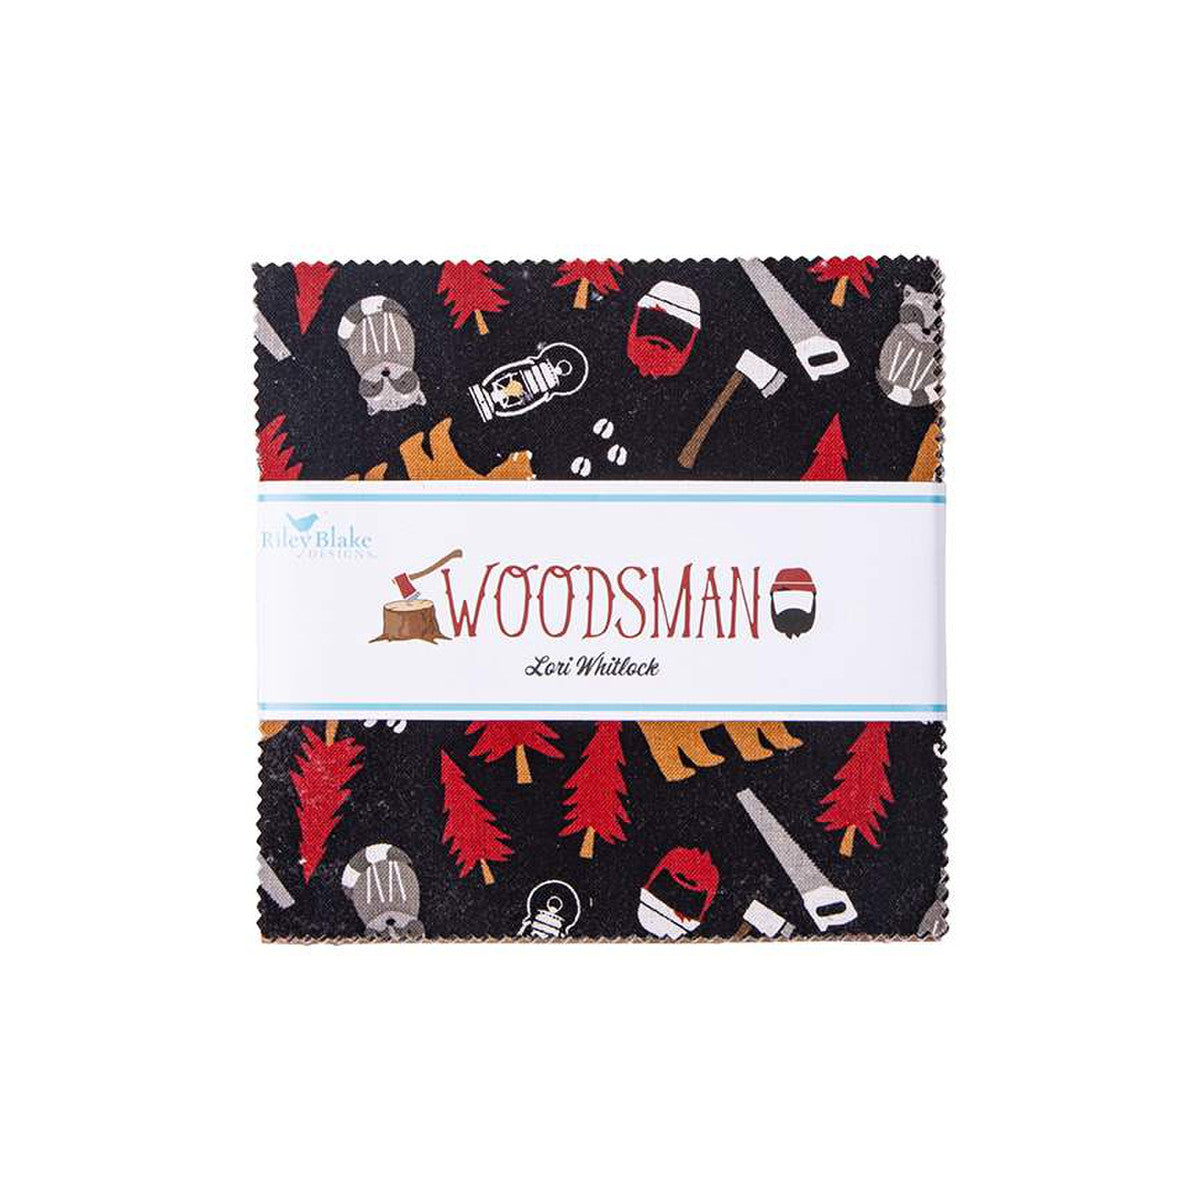 Woodsman 5" Stacker by Lori Whitlock for Riley Blake Designs